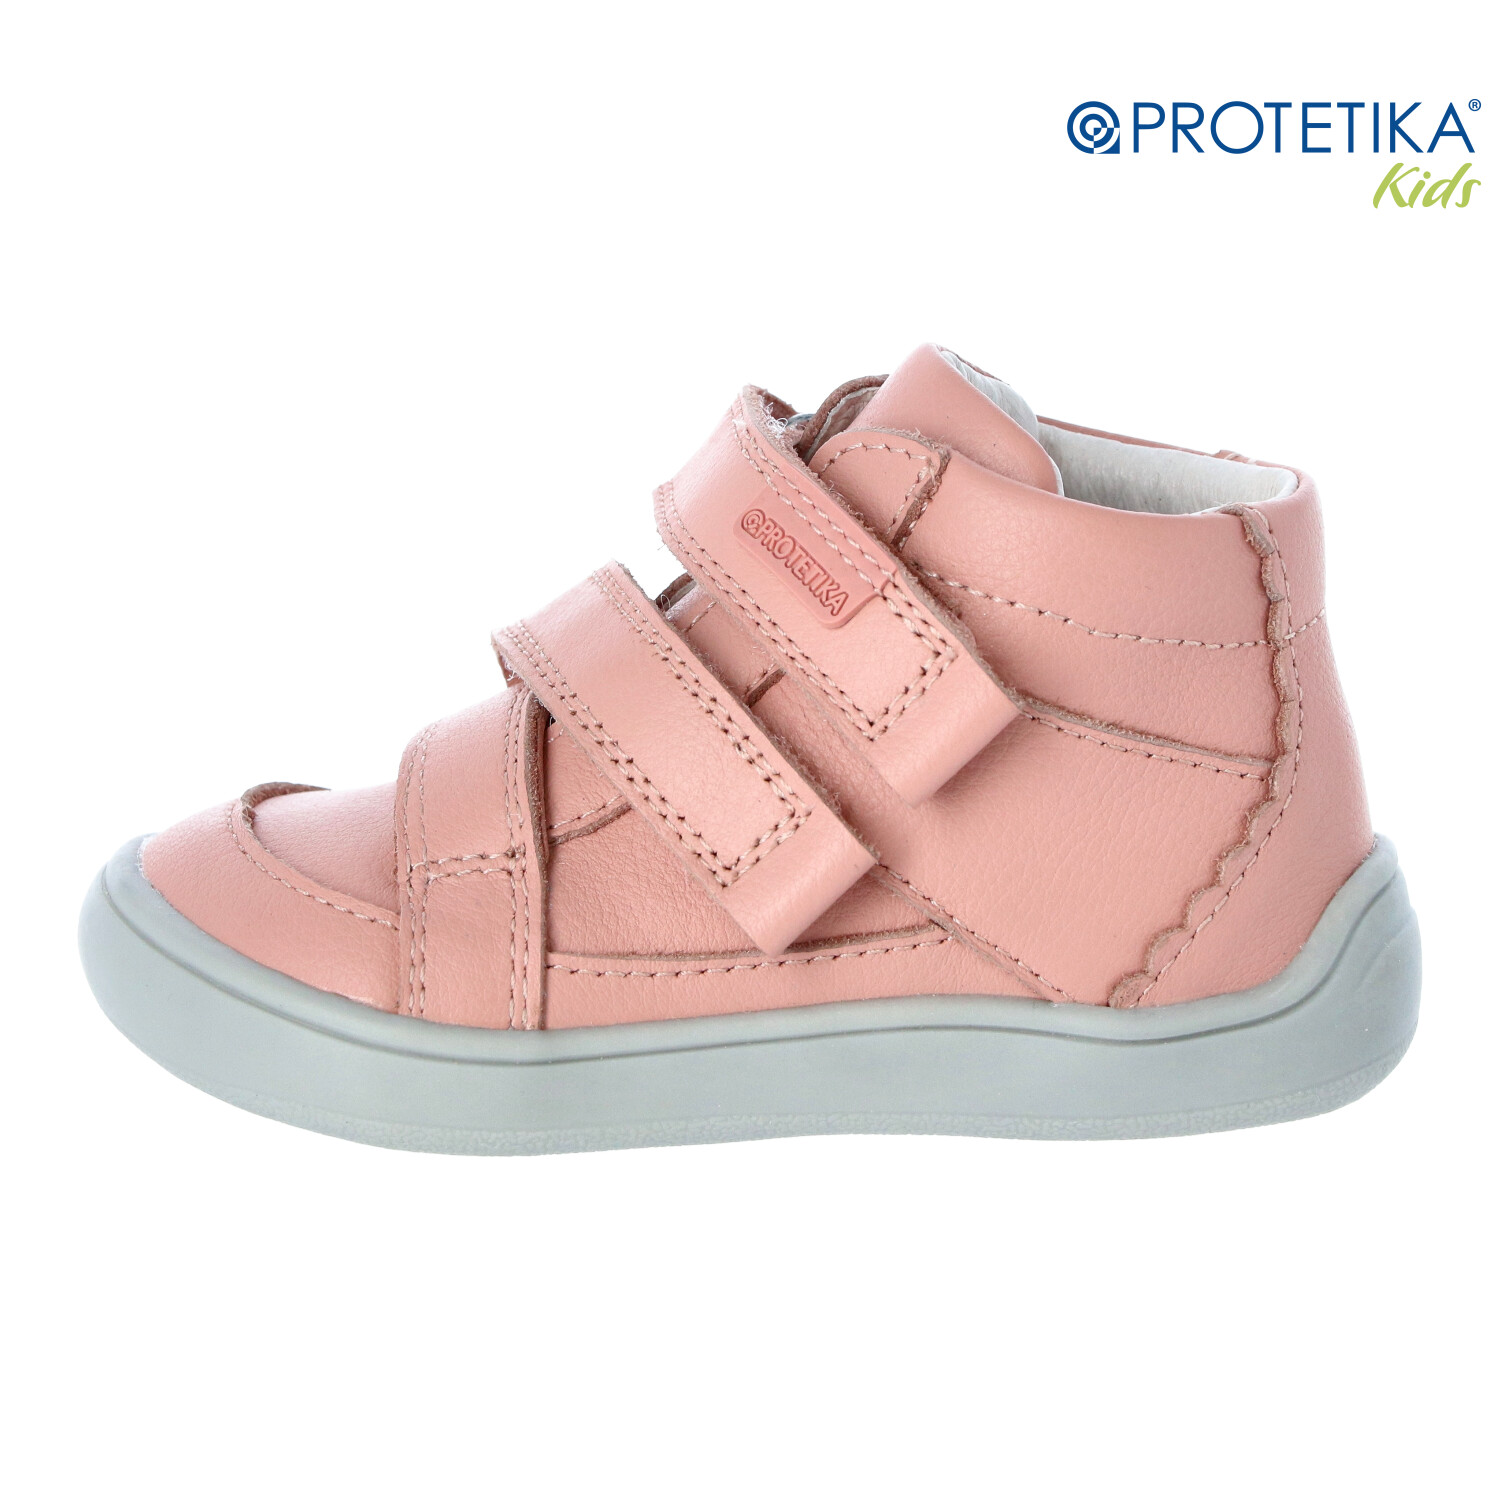 Protetika - barefootove topánky DELIA pink